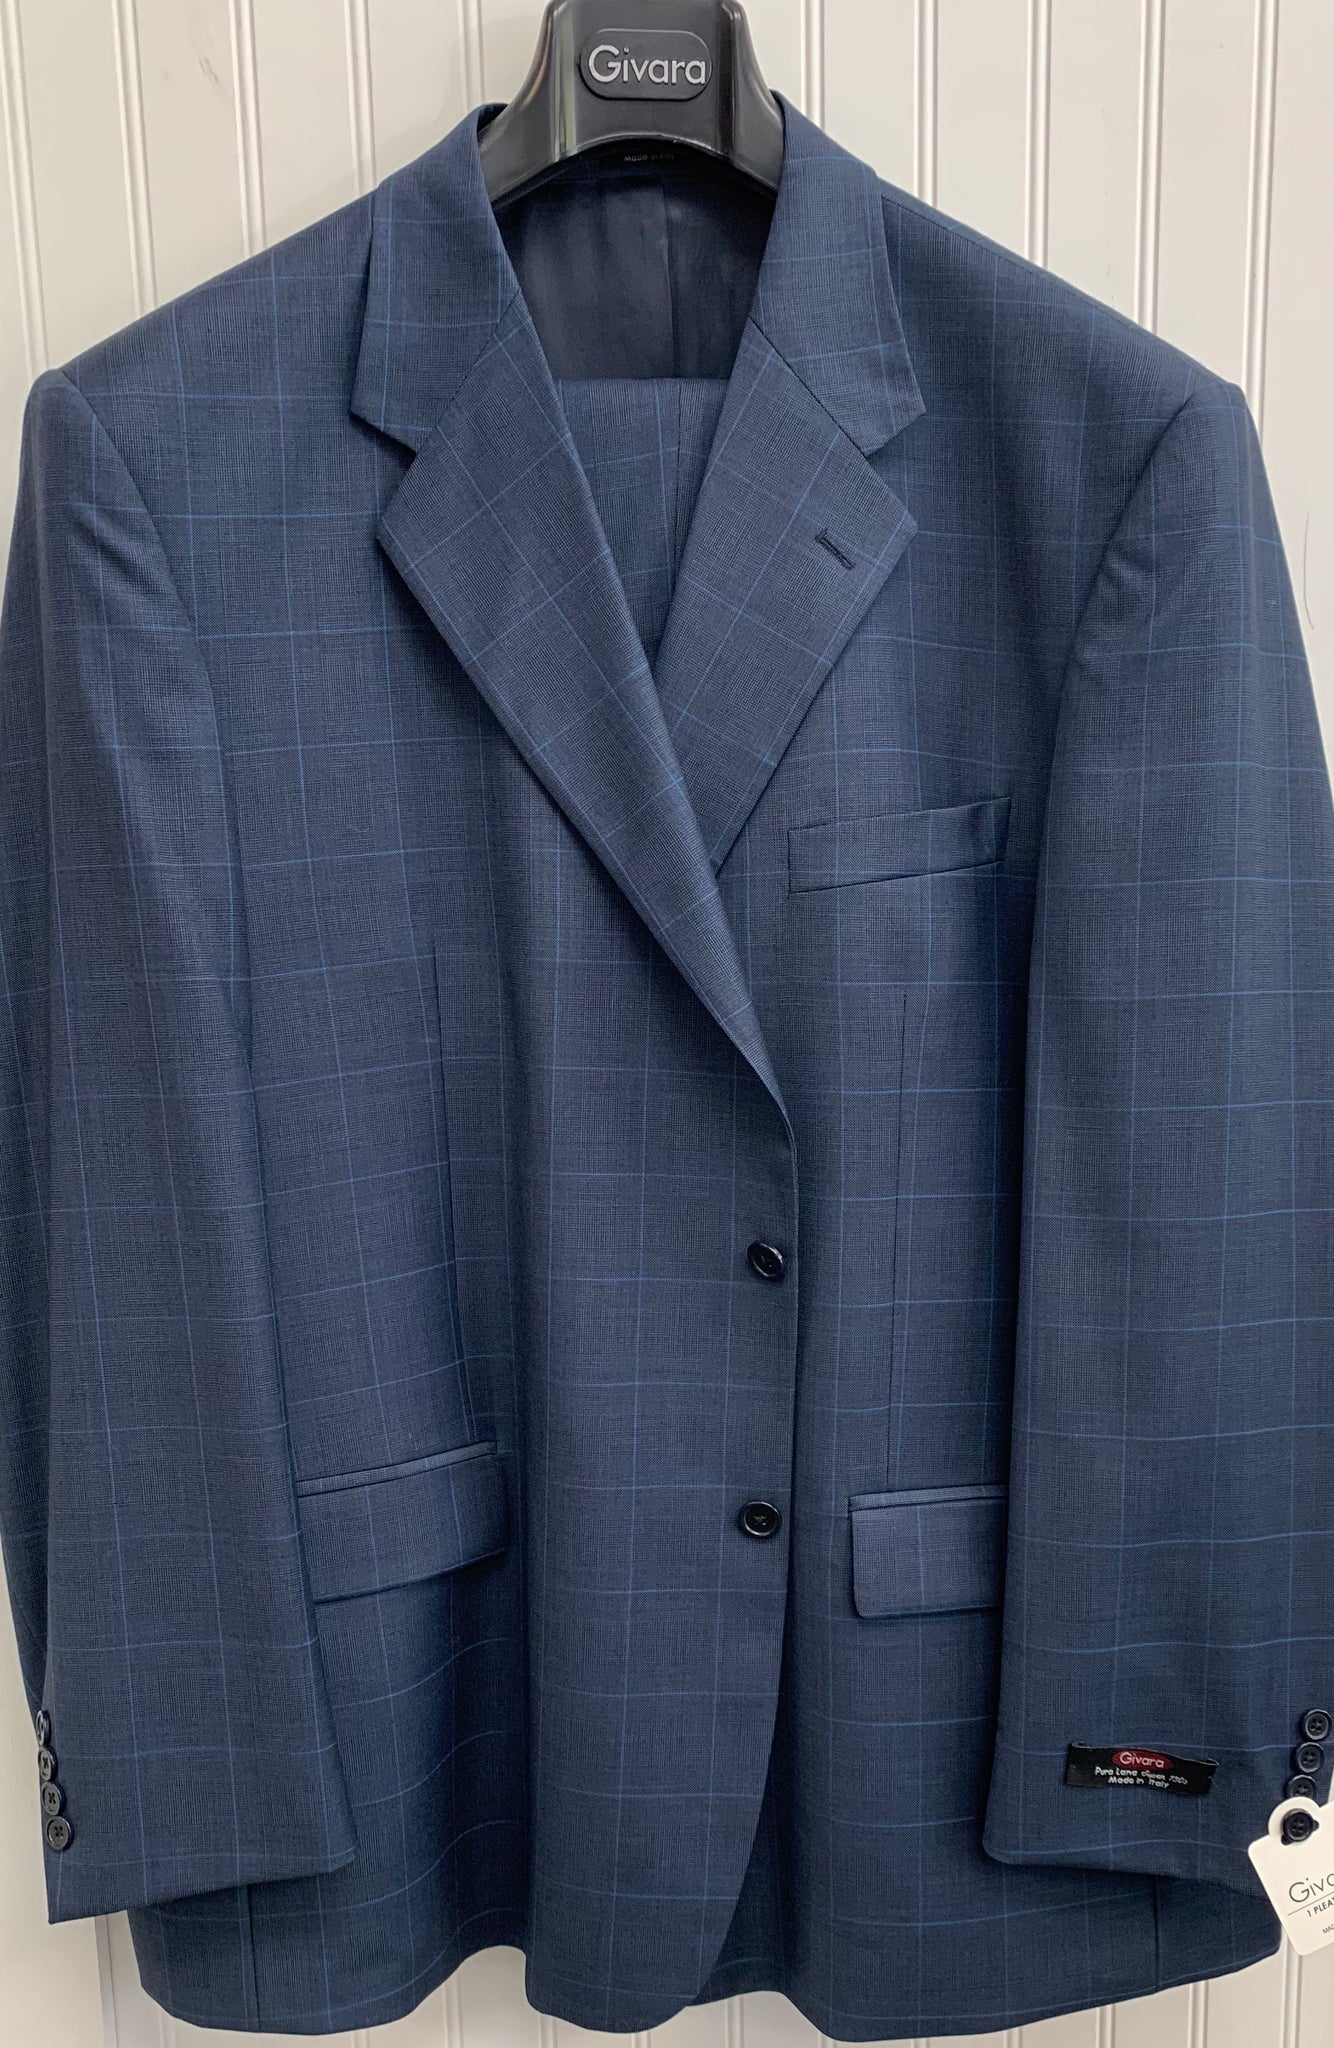 Givara Suit - GG-1862-2SV- (Blue w/ Lt. Blue Windowpane)